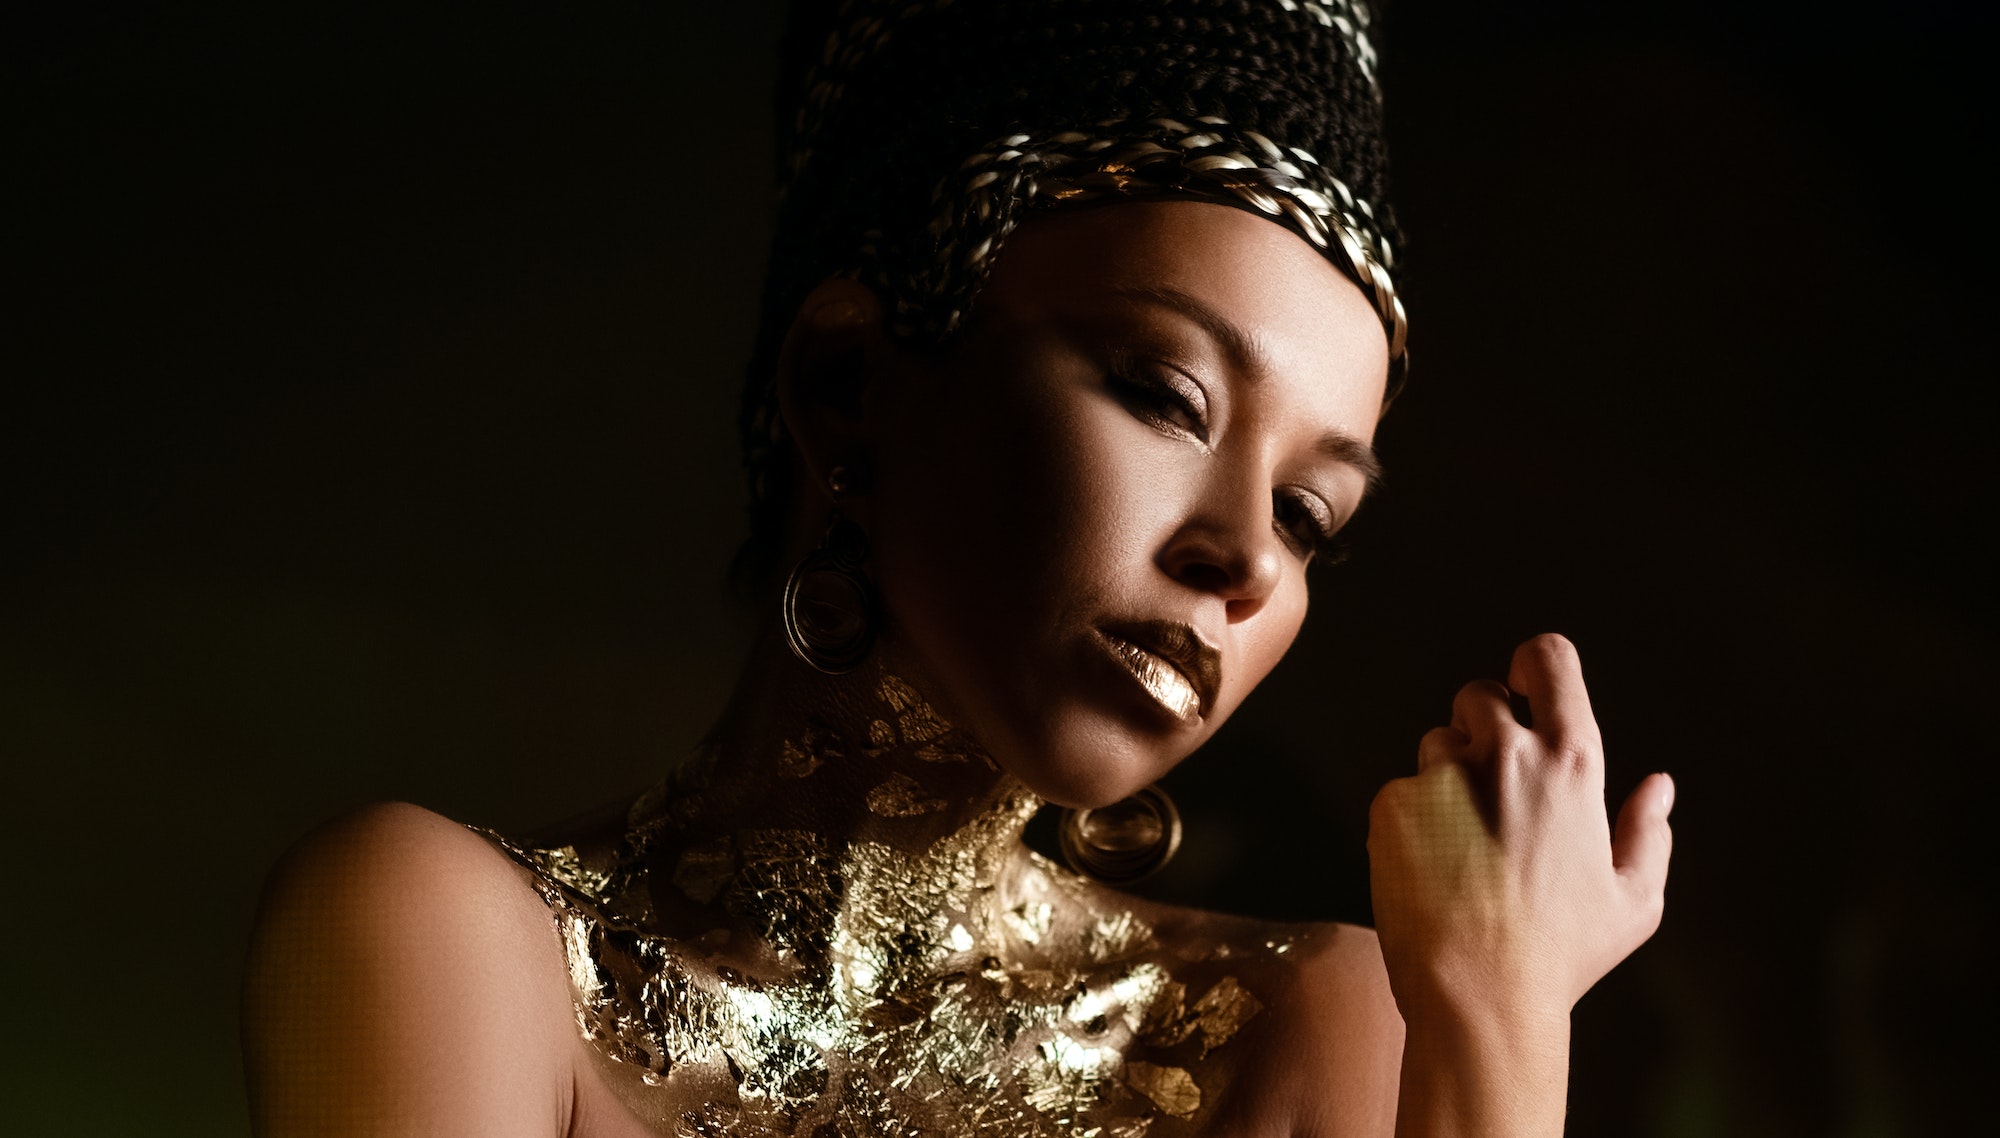 woman queen Cleopatra art photo, creative makeup Black hair